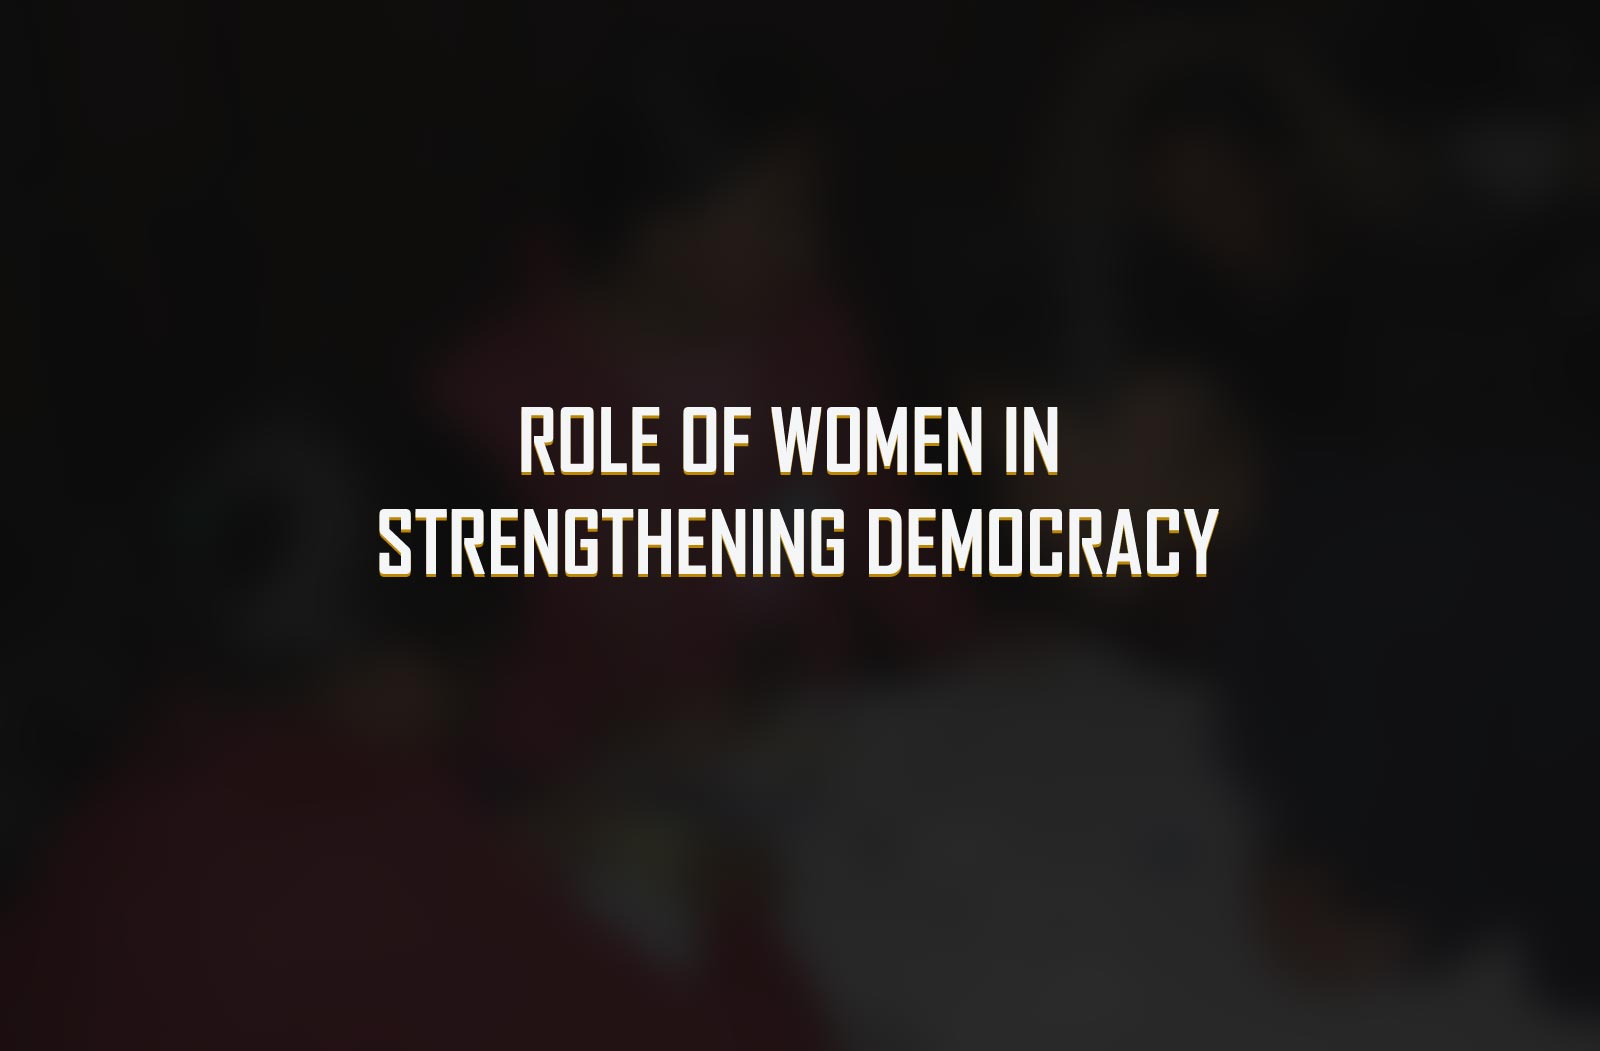 ROLE OF WOMEN IN STRENGTHENING DEMOCRACY